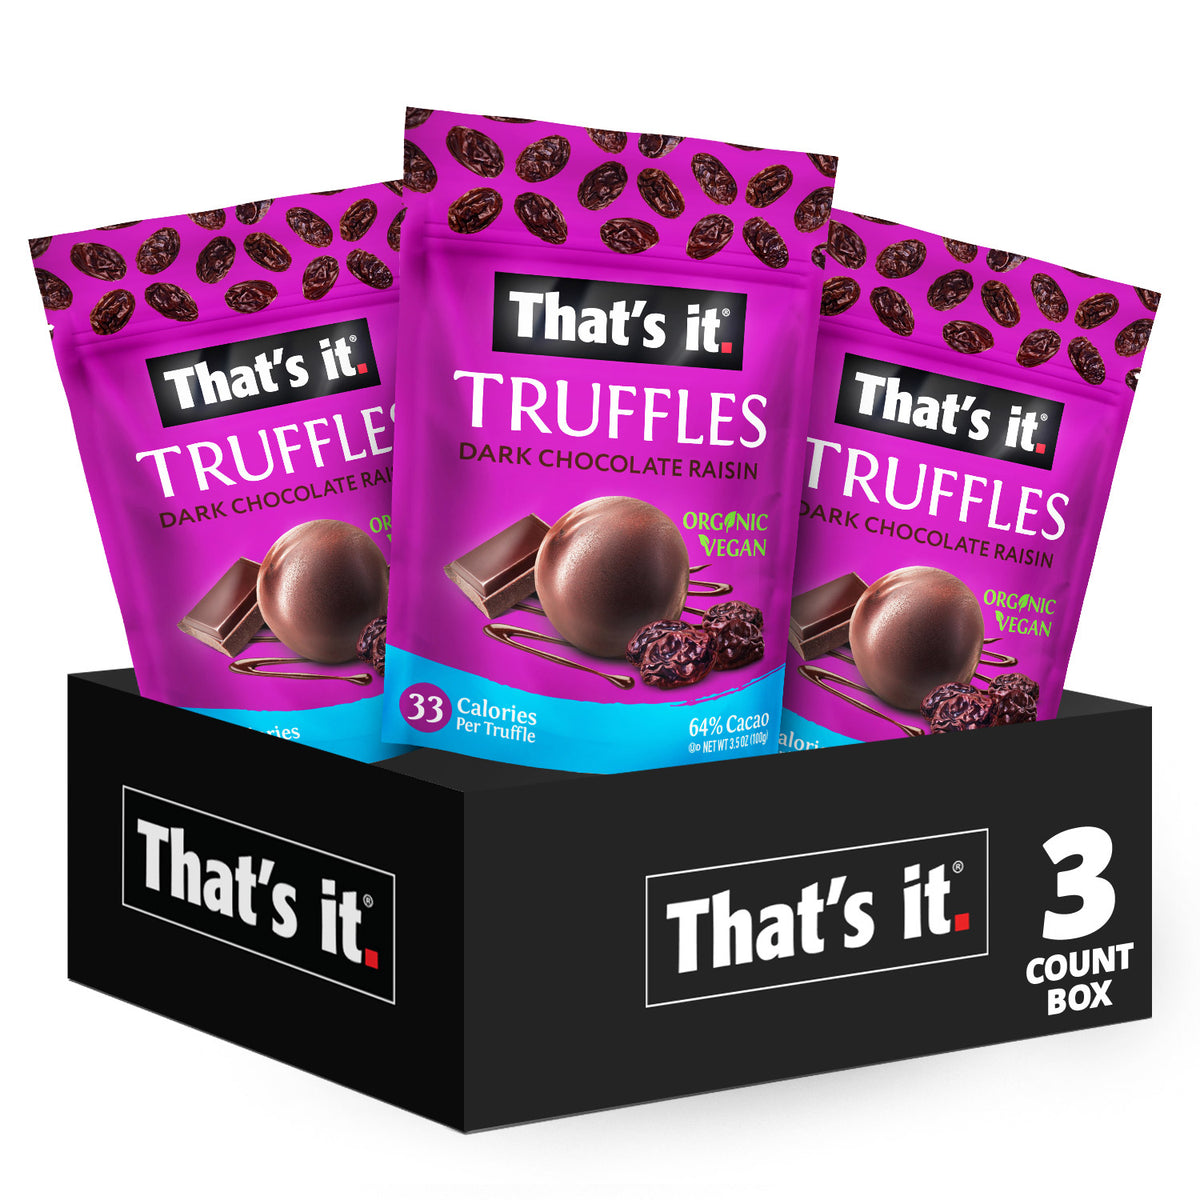 3 count box of 3.5 ounce pouches of dark chocolate raisin truffles